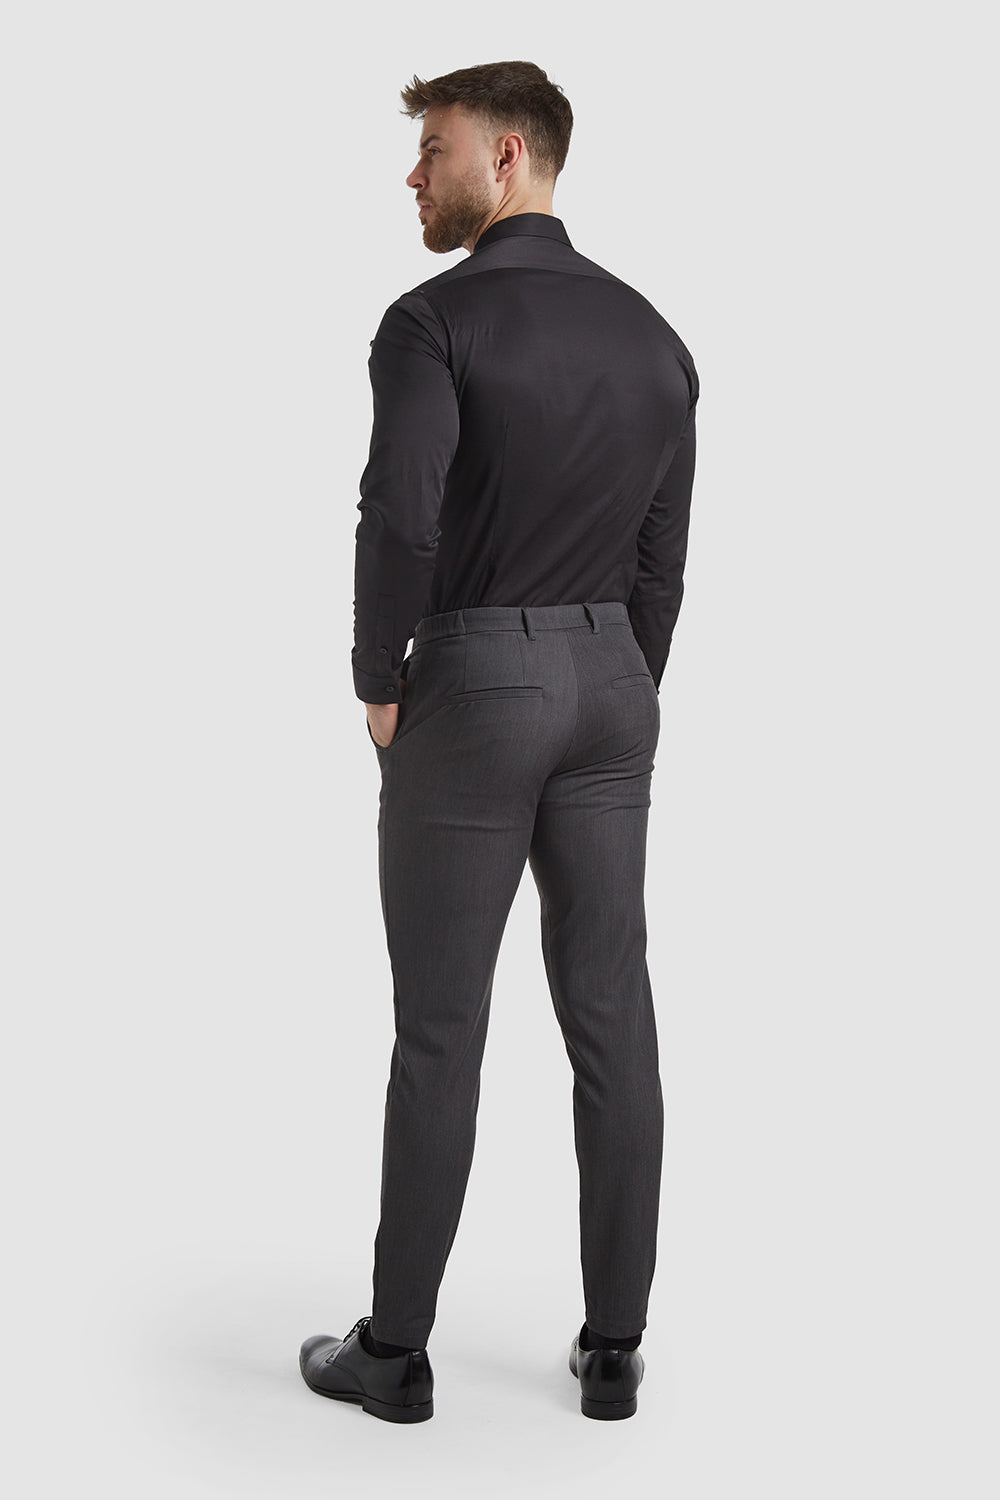 Buy Men Black Solid Super Slim Fit Casual Trousers Online  553004  Peter  England